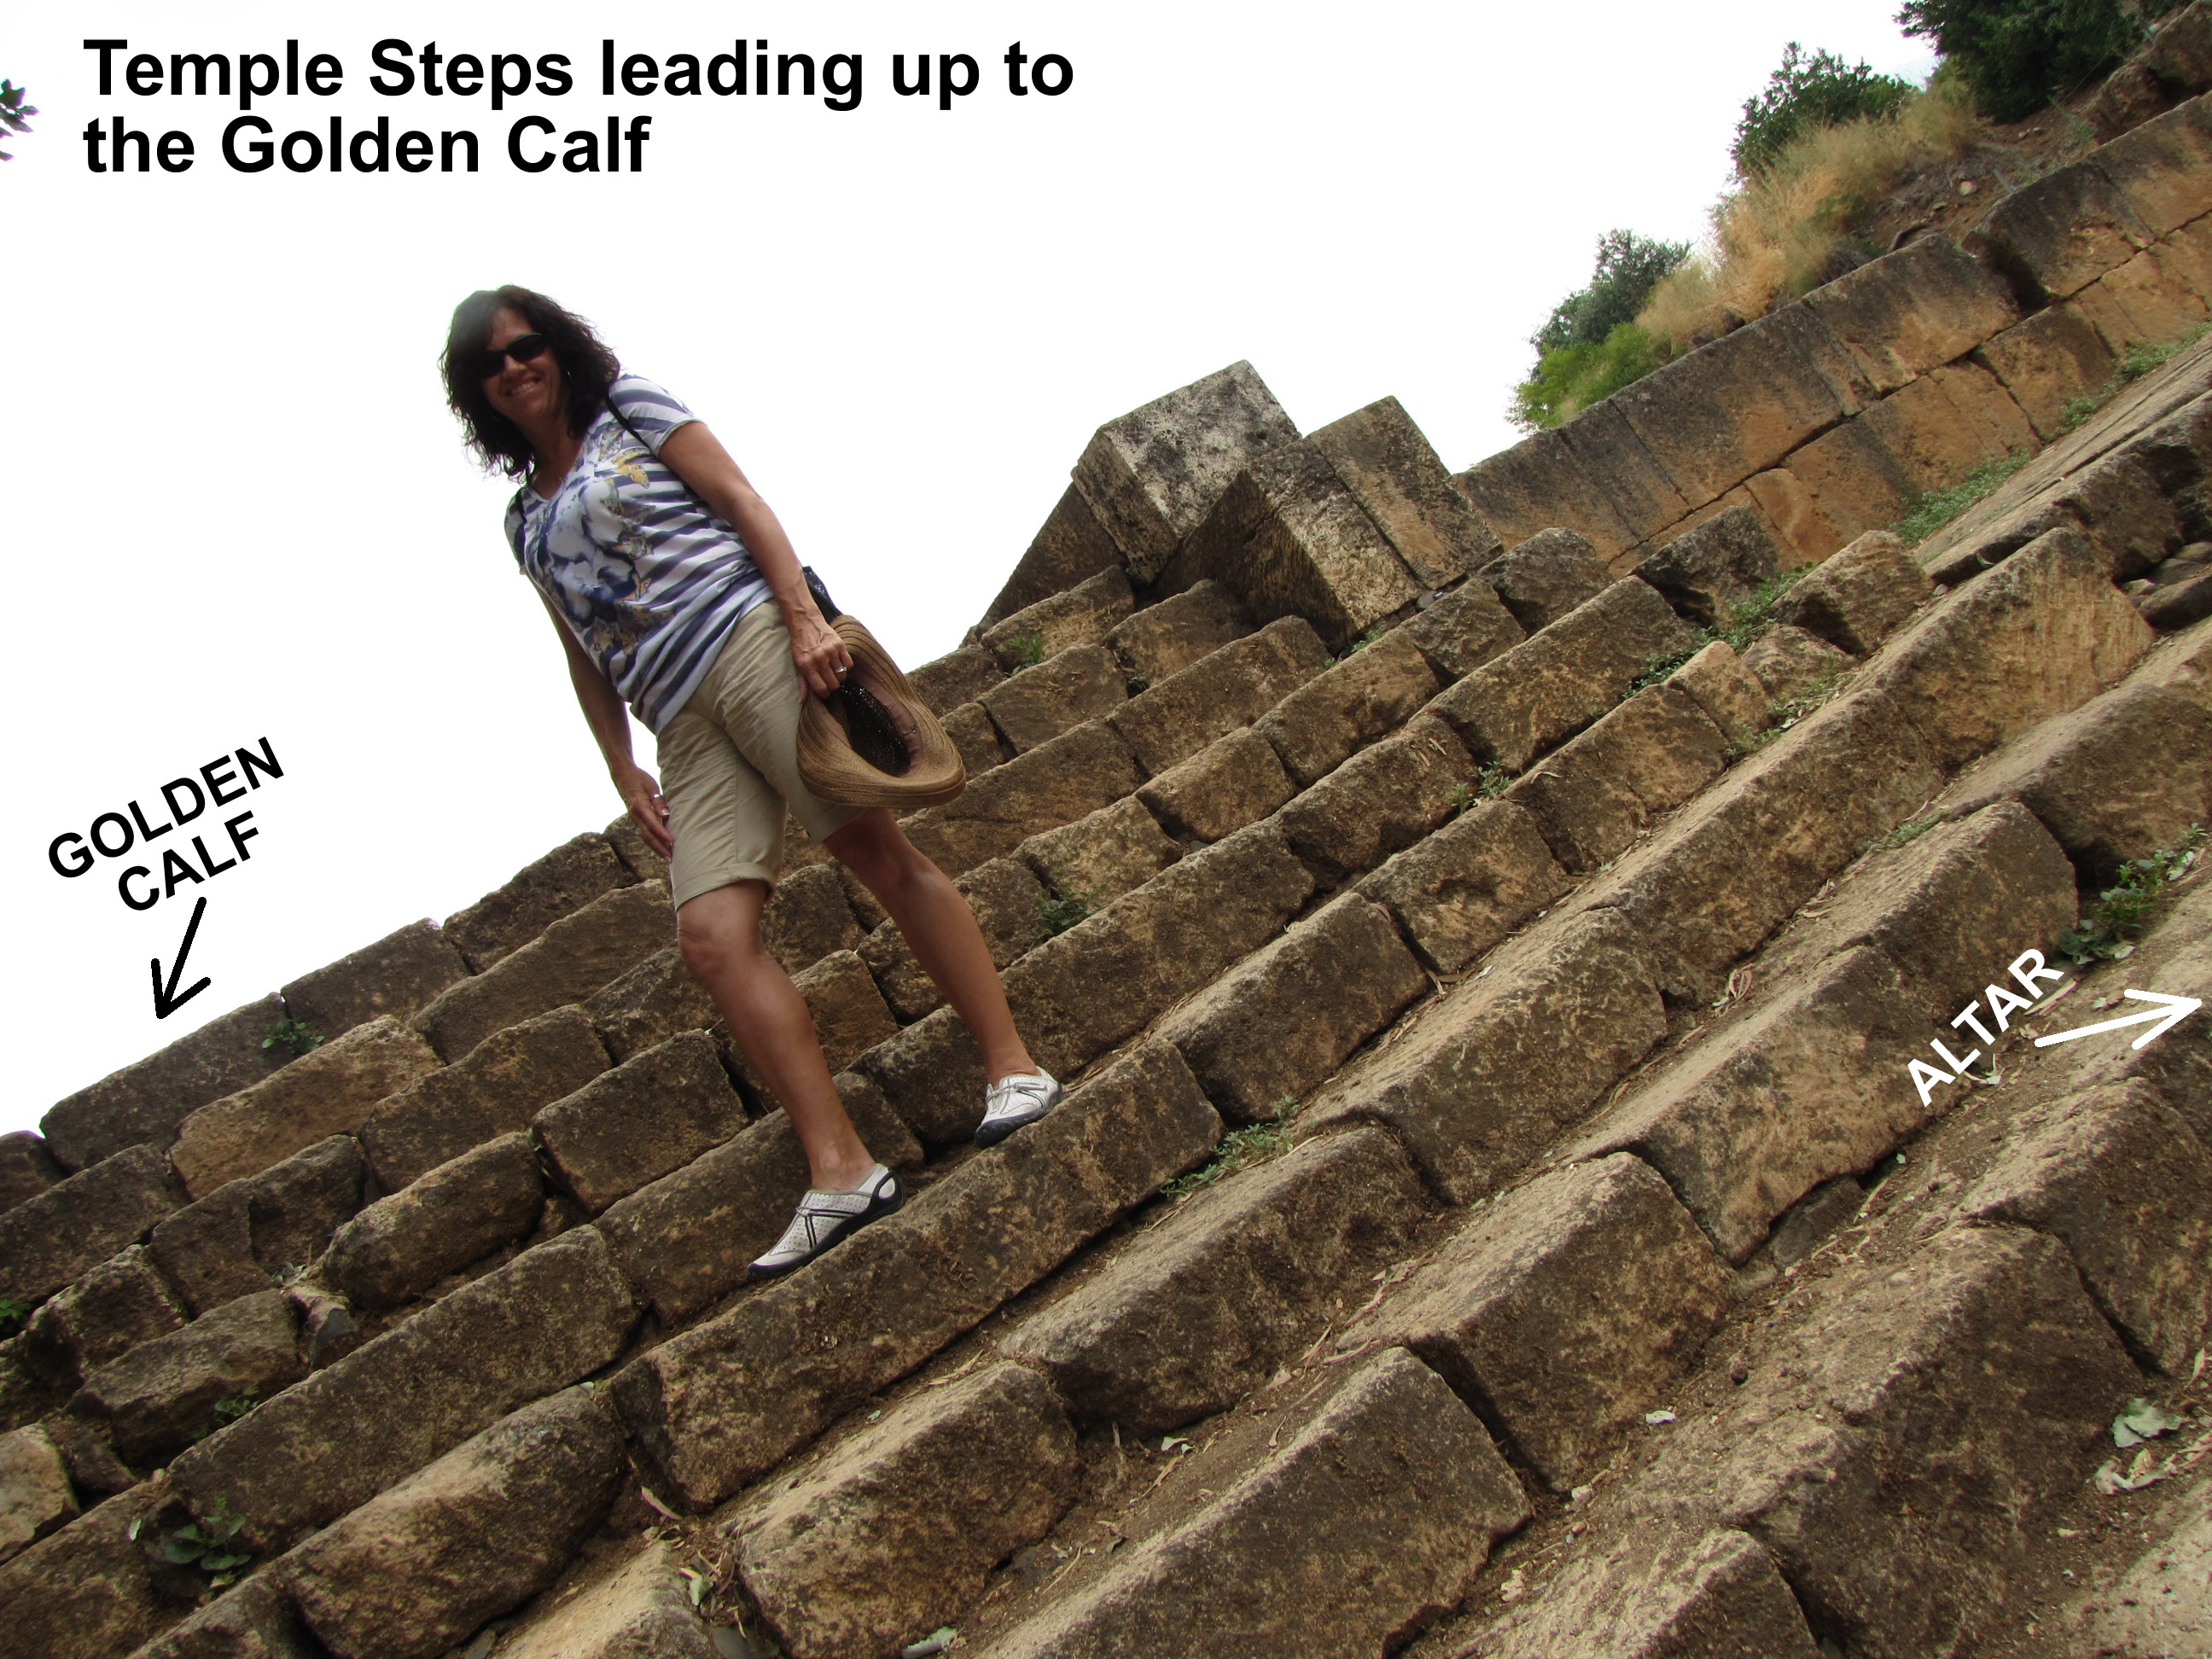 Golden Calf Shrine Temple steps to platform in Dan Israel